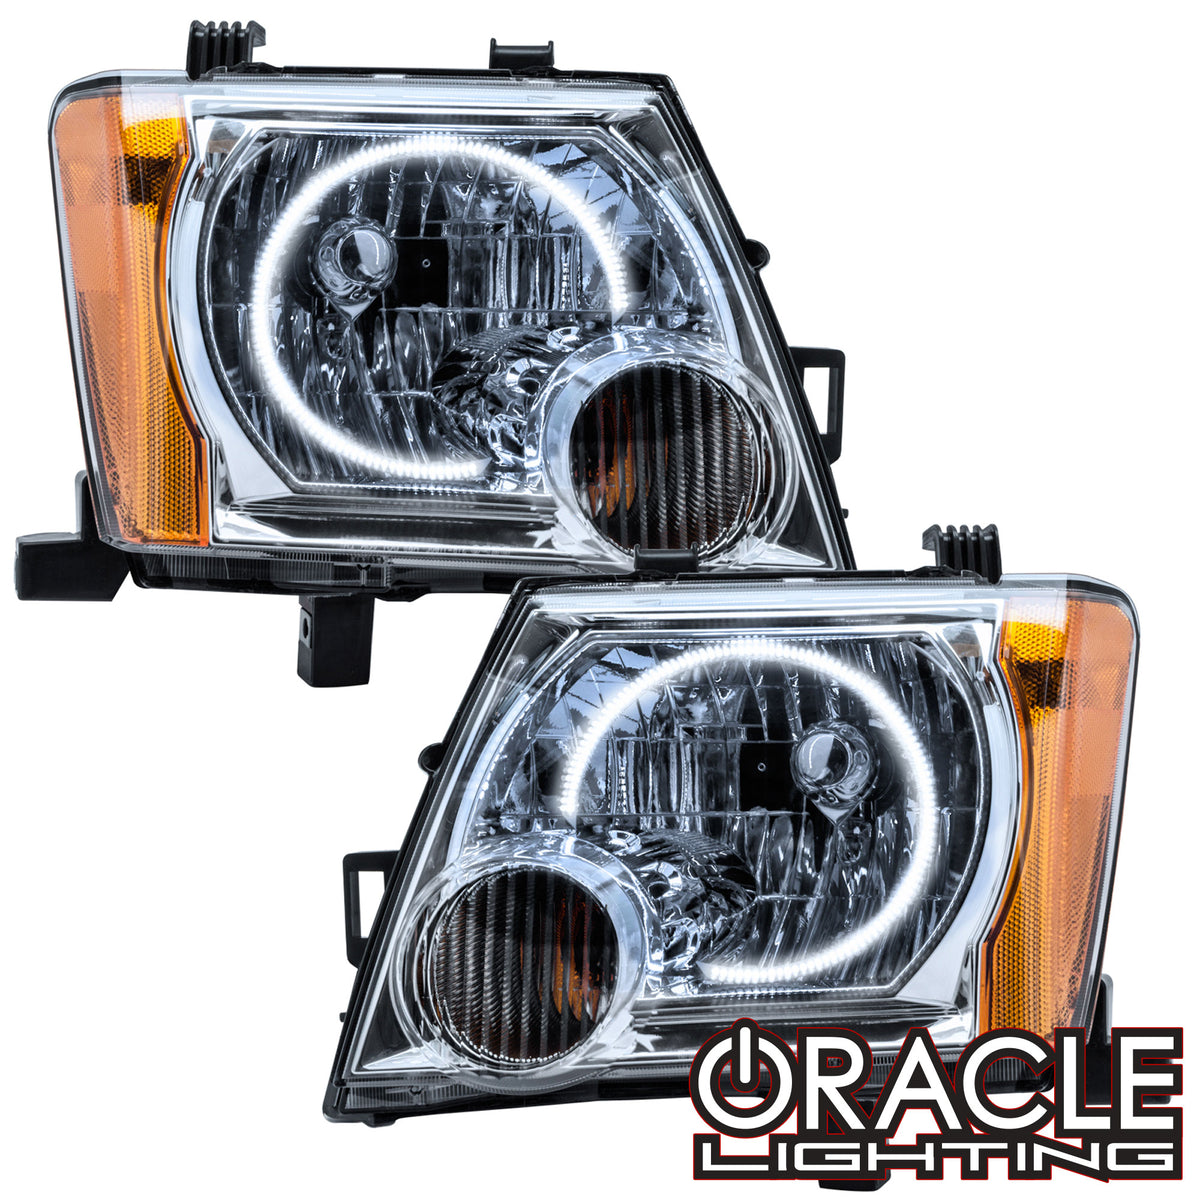 ORACLE Lighting 2005-2014 Nissan Xterra Pre-Assembled LED